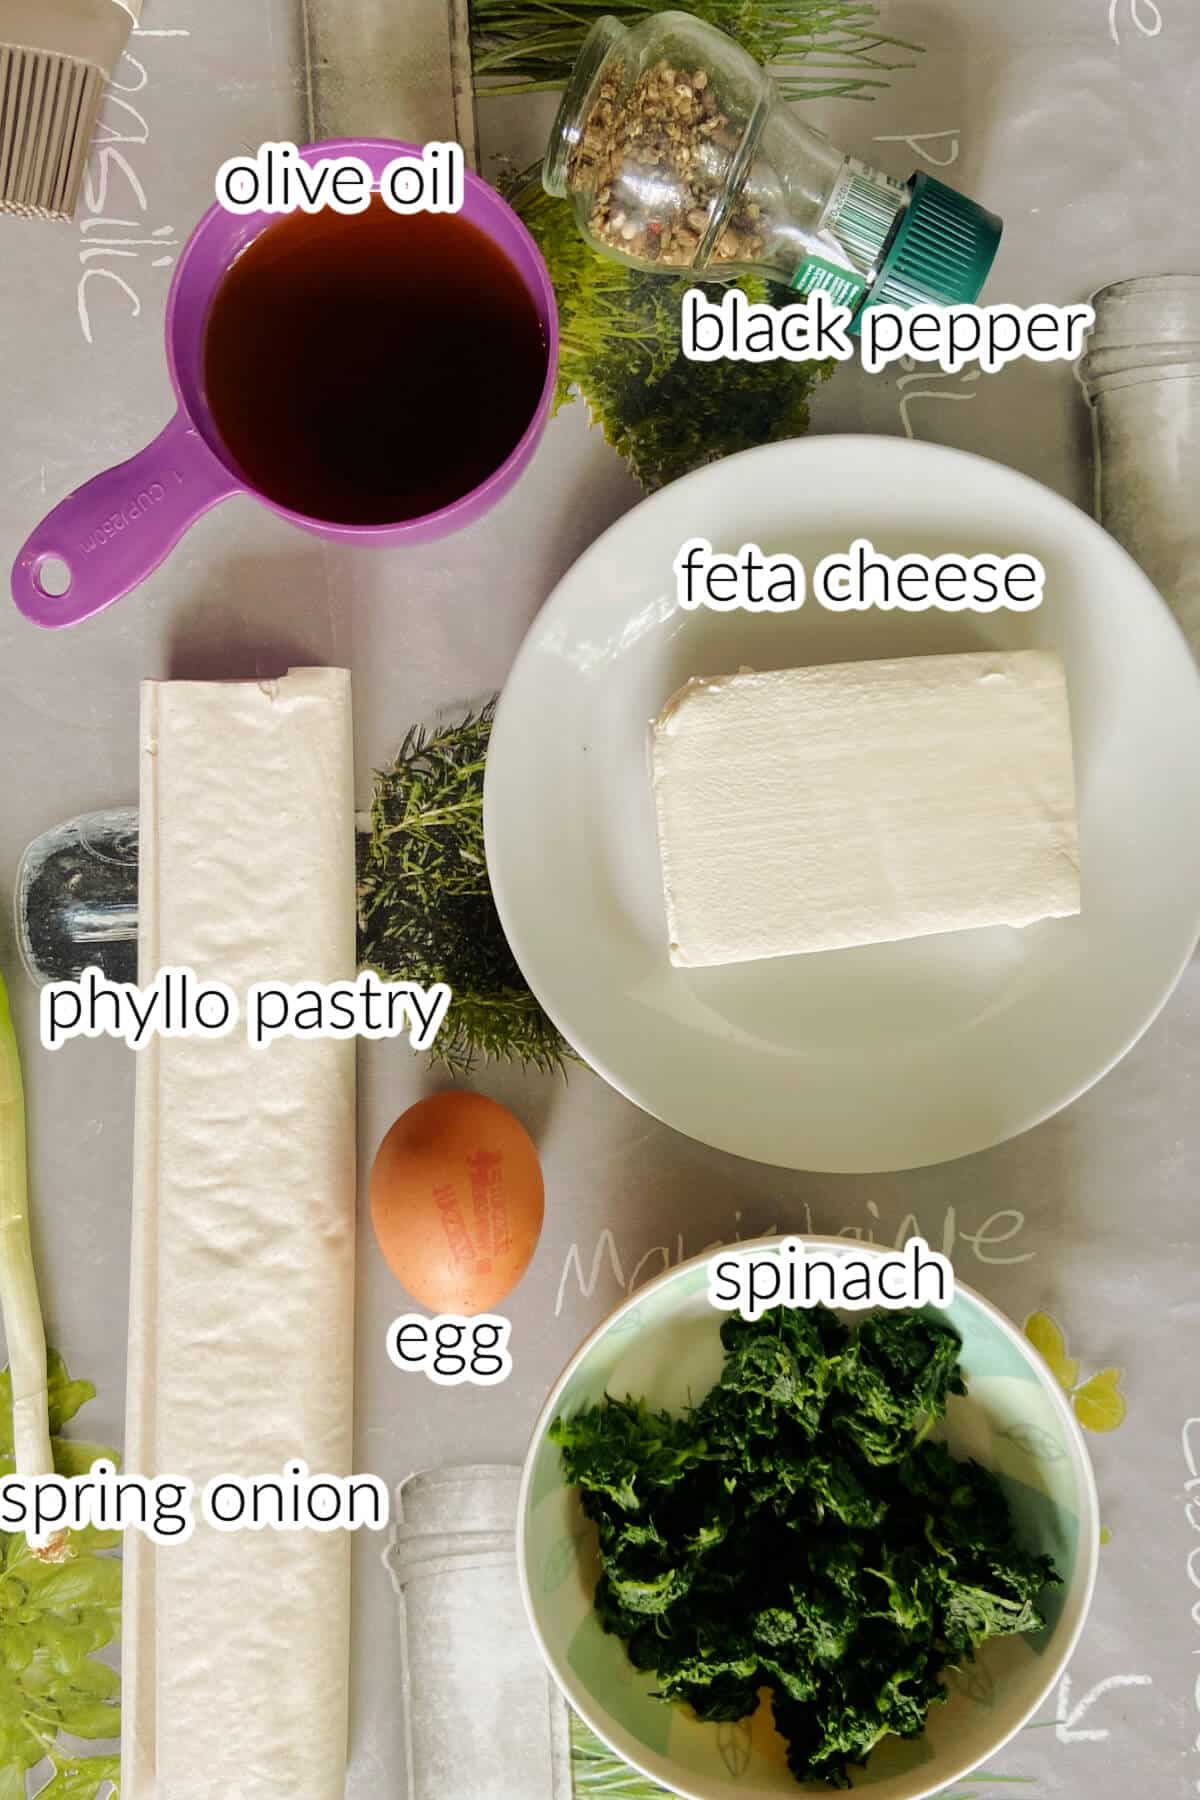 Ingredients needed to make Greek spanakopita.